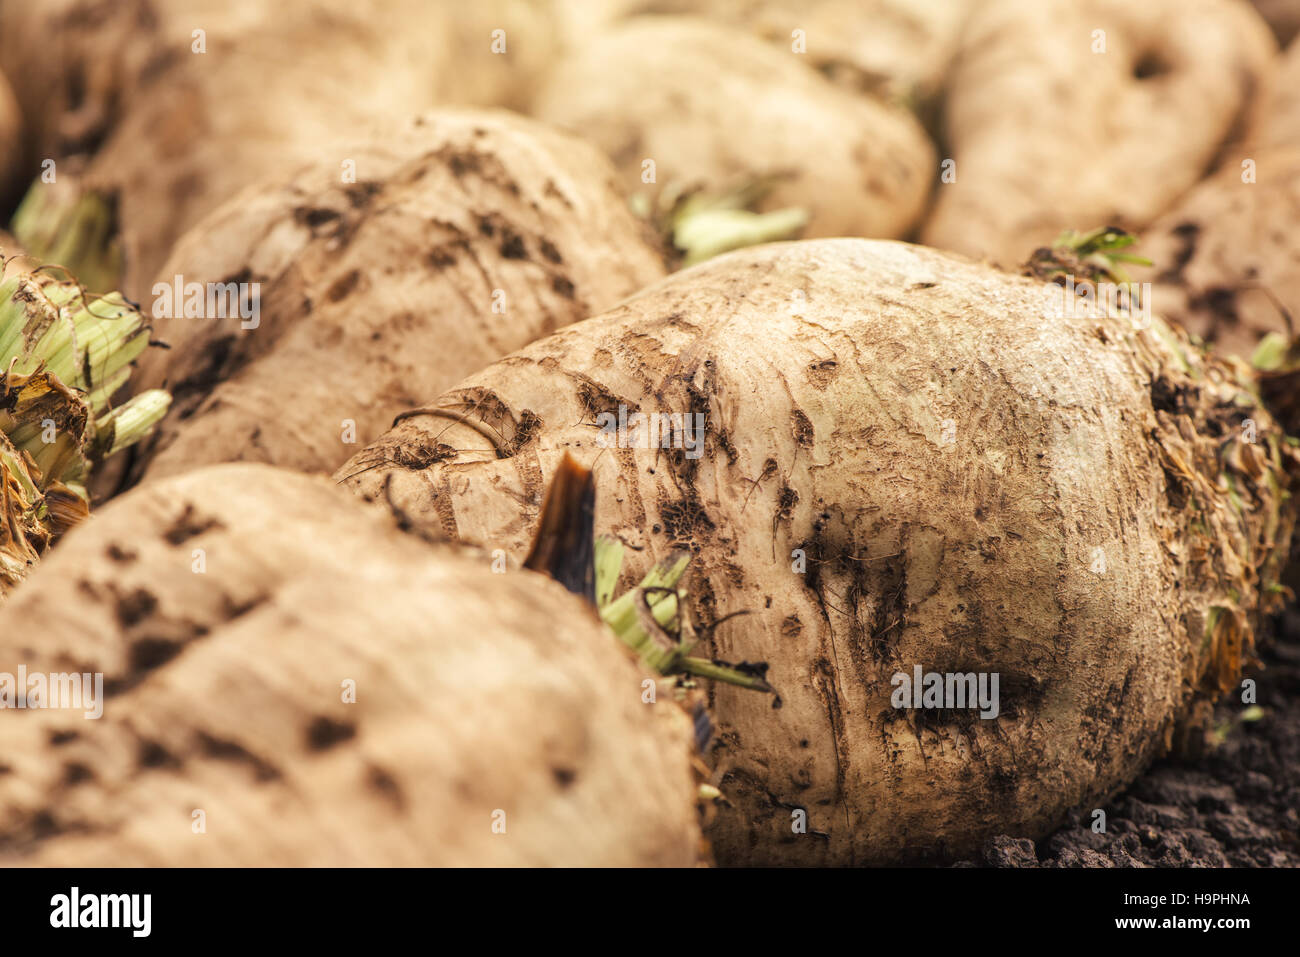 Harvested sugar beet crop root pile Stock Photo